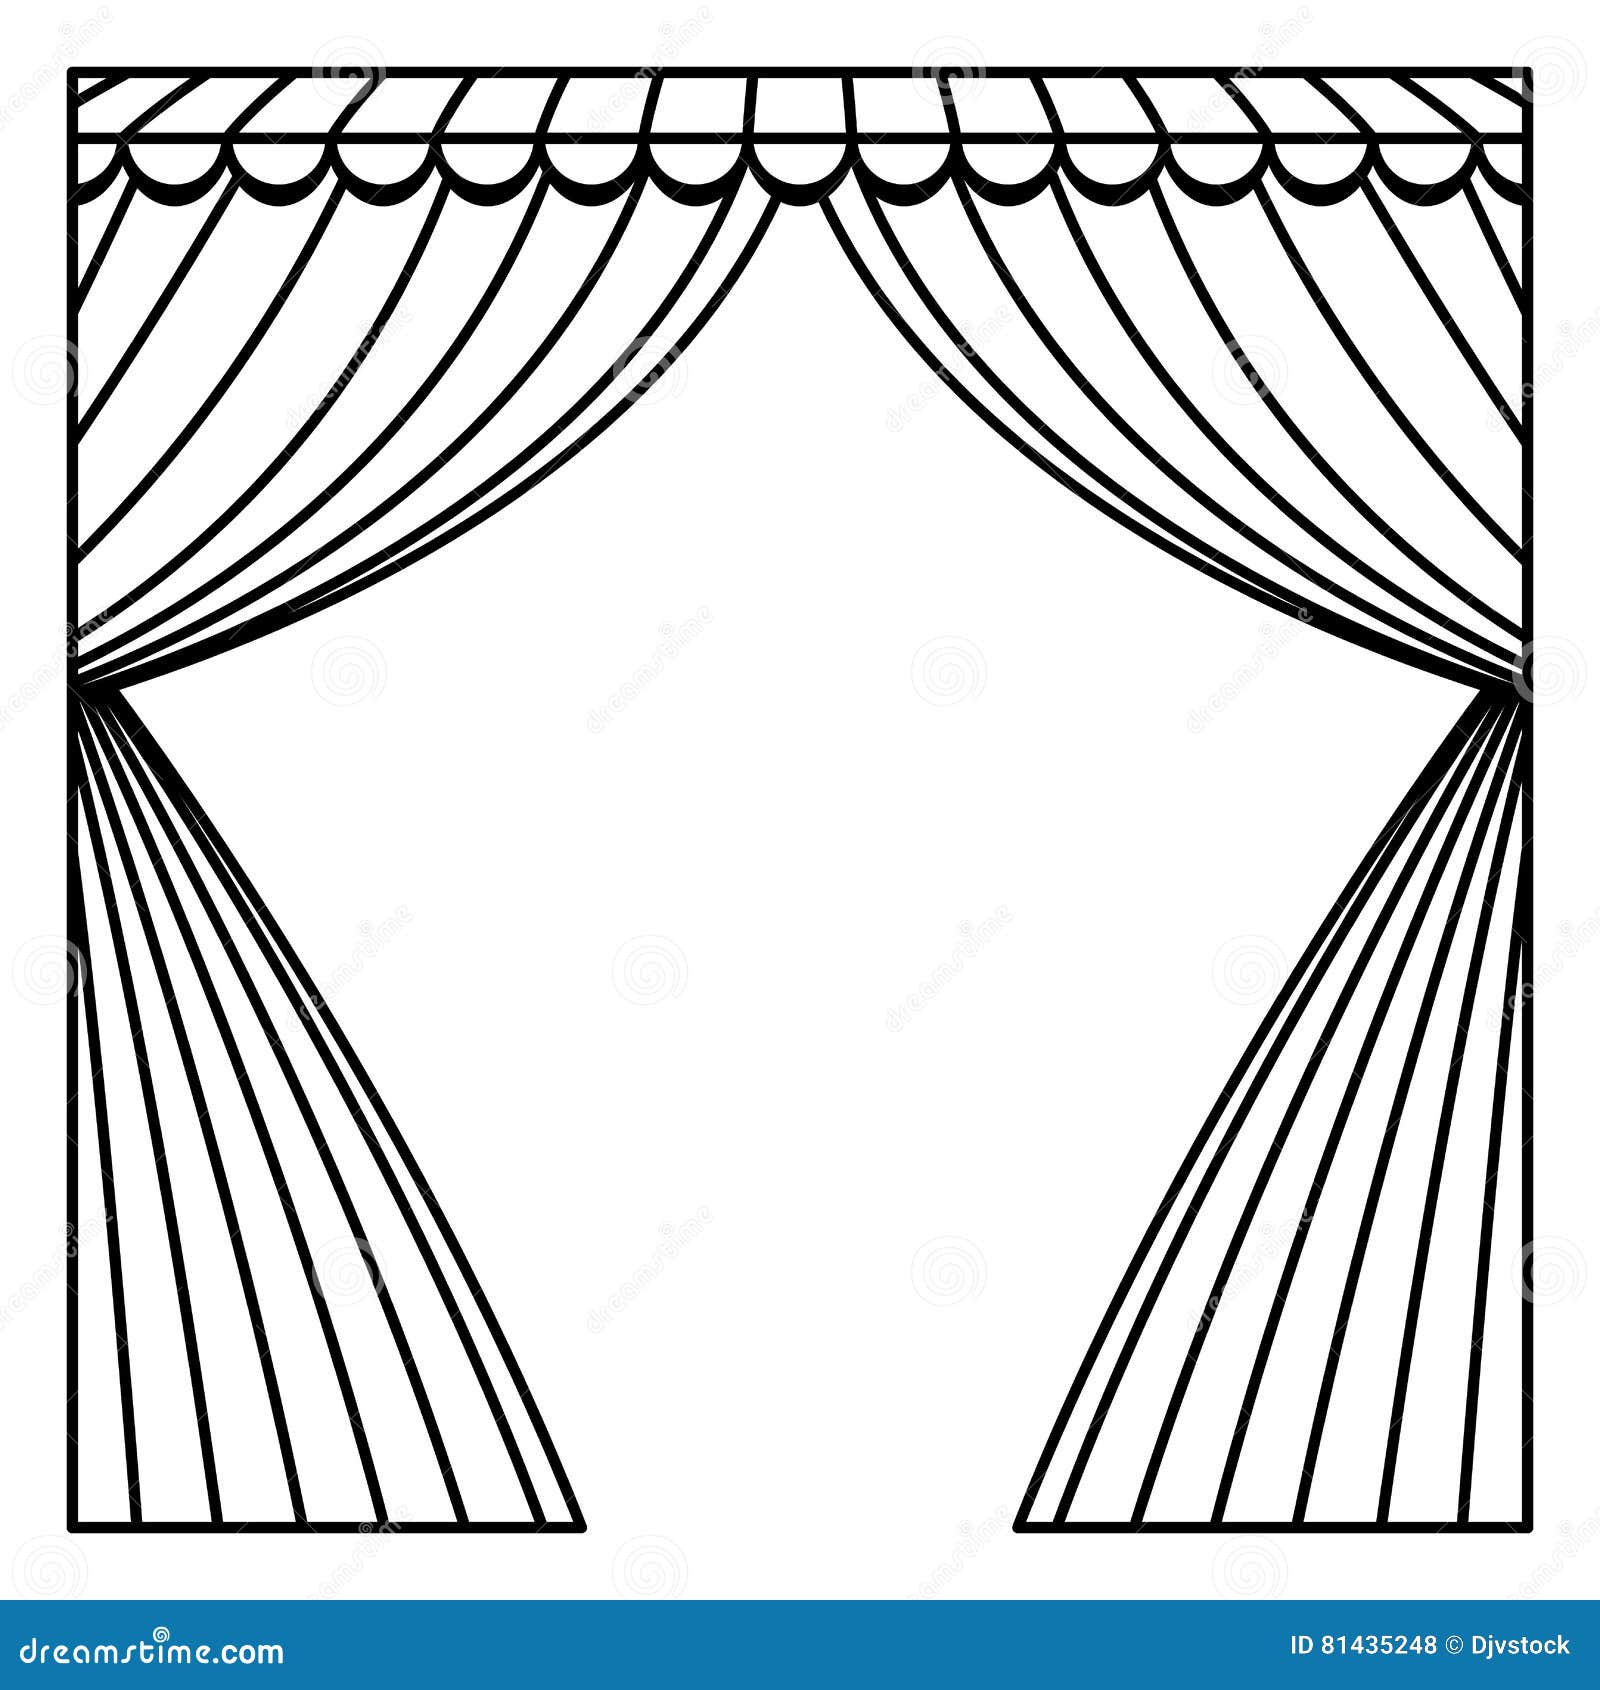 Circus curtain raises stock vector. Illustration of colors - 81435248